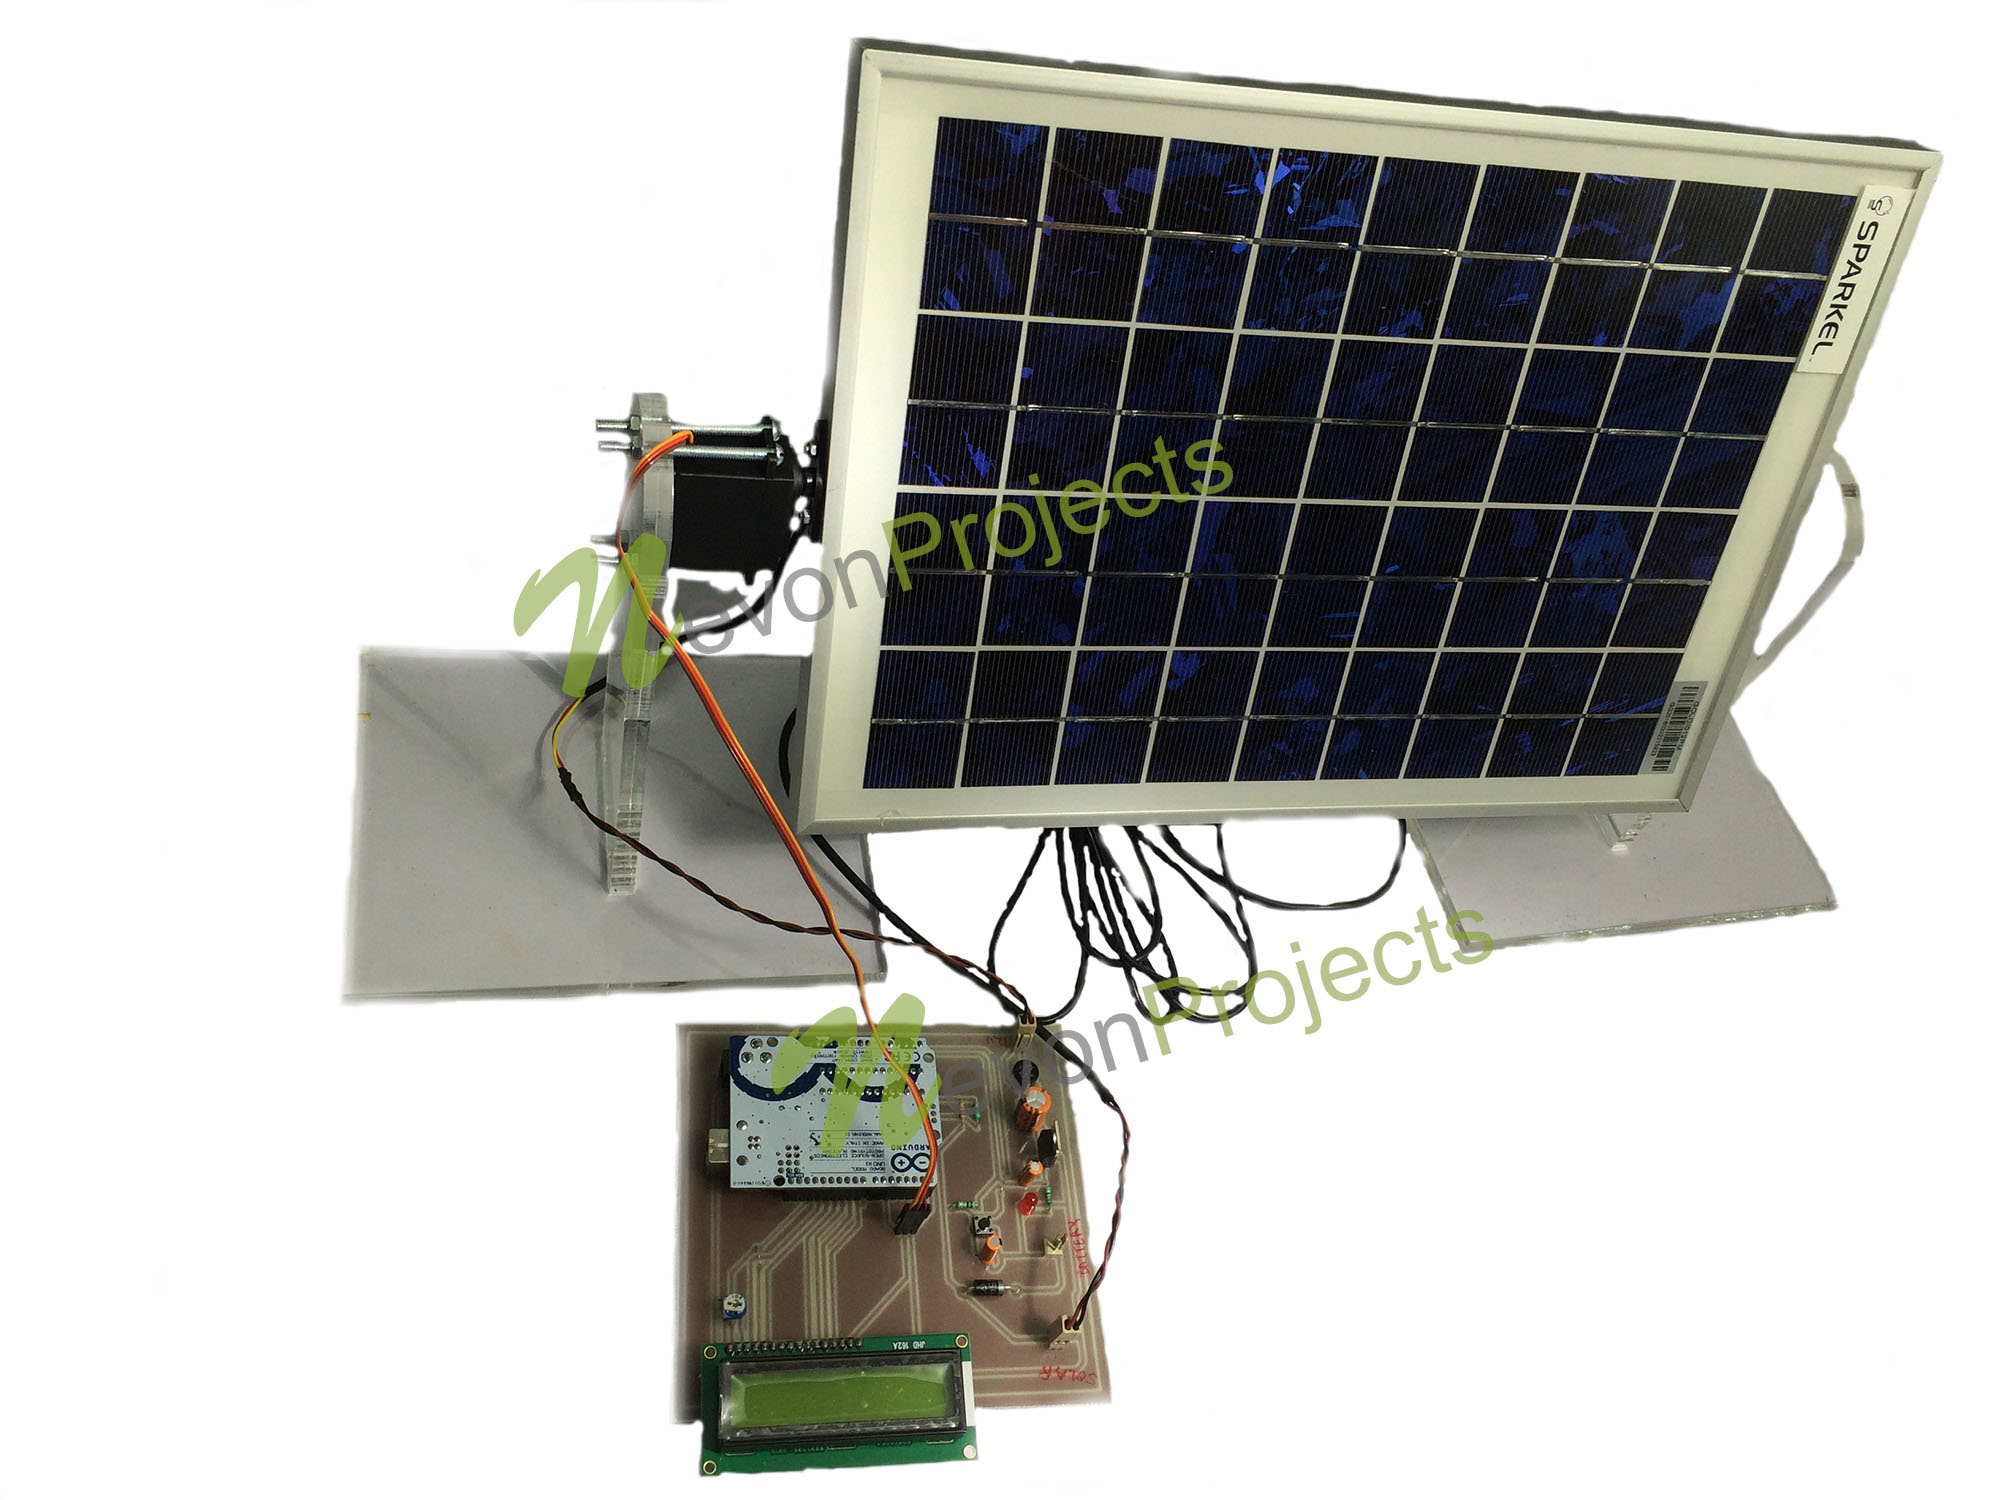 Rotating Solar Panel Using Arduino For High Efficiency